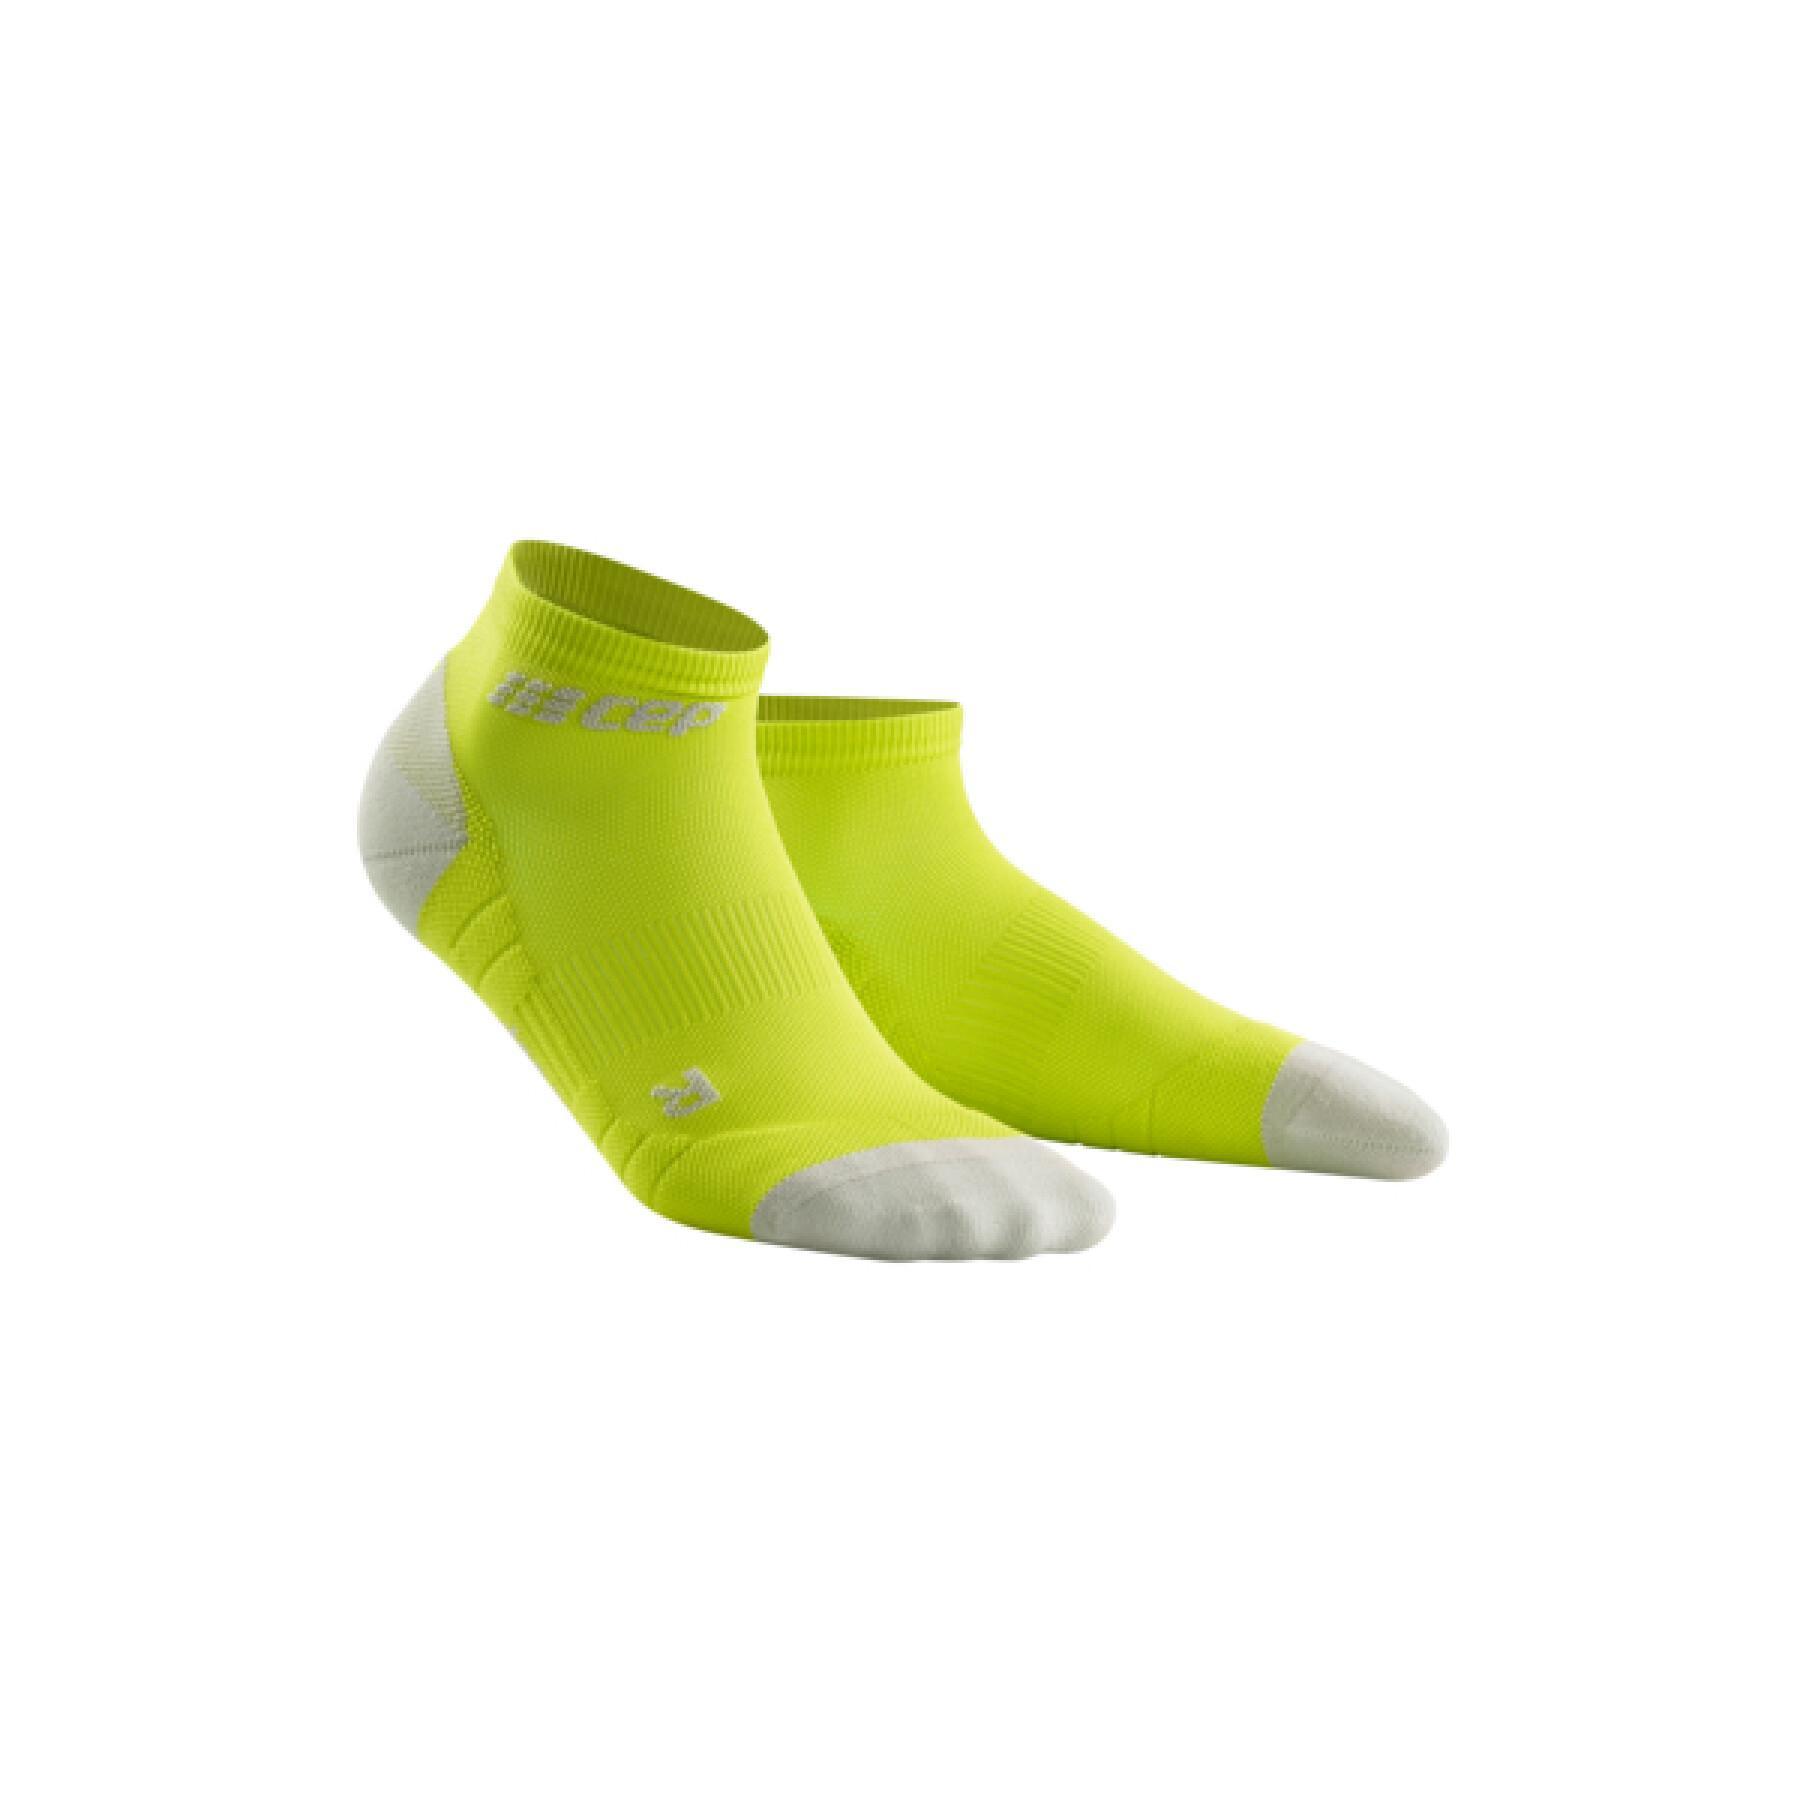 CEP Short Compression Socks 3.0 Yellow Men's Running Sport Socks WP5BEX 